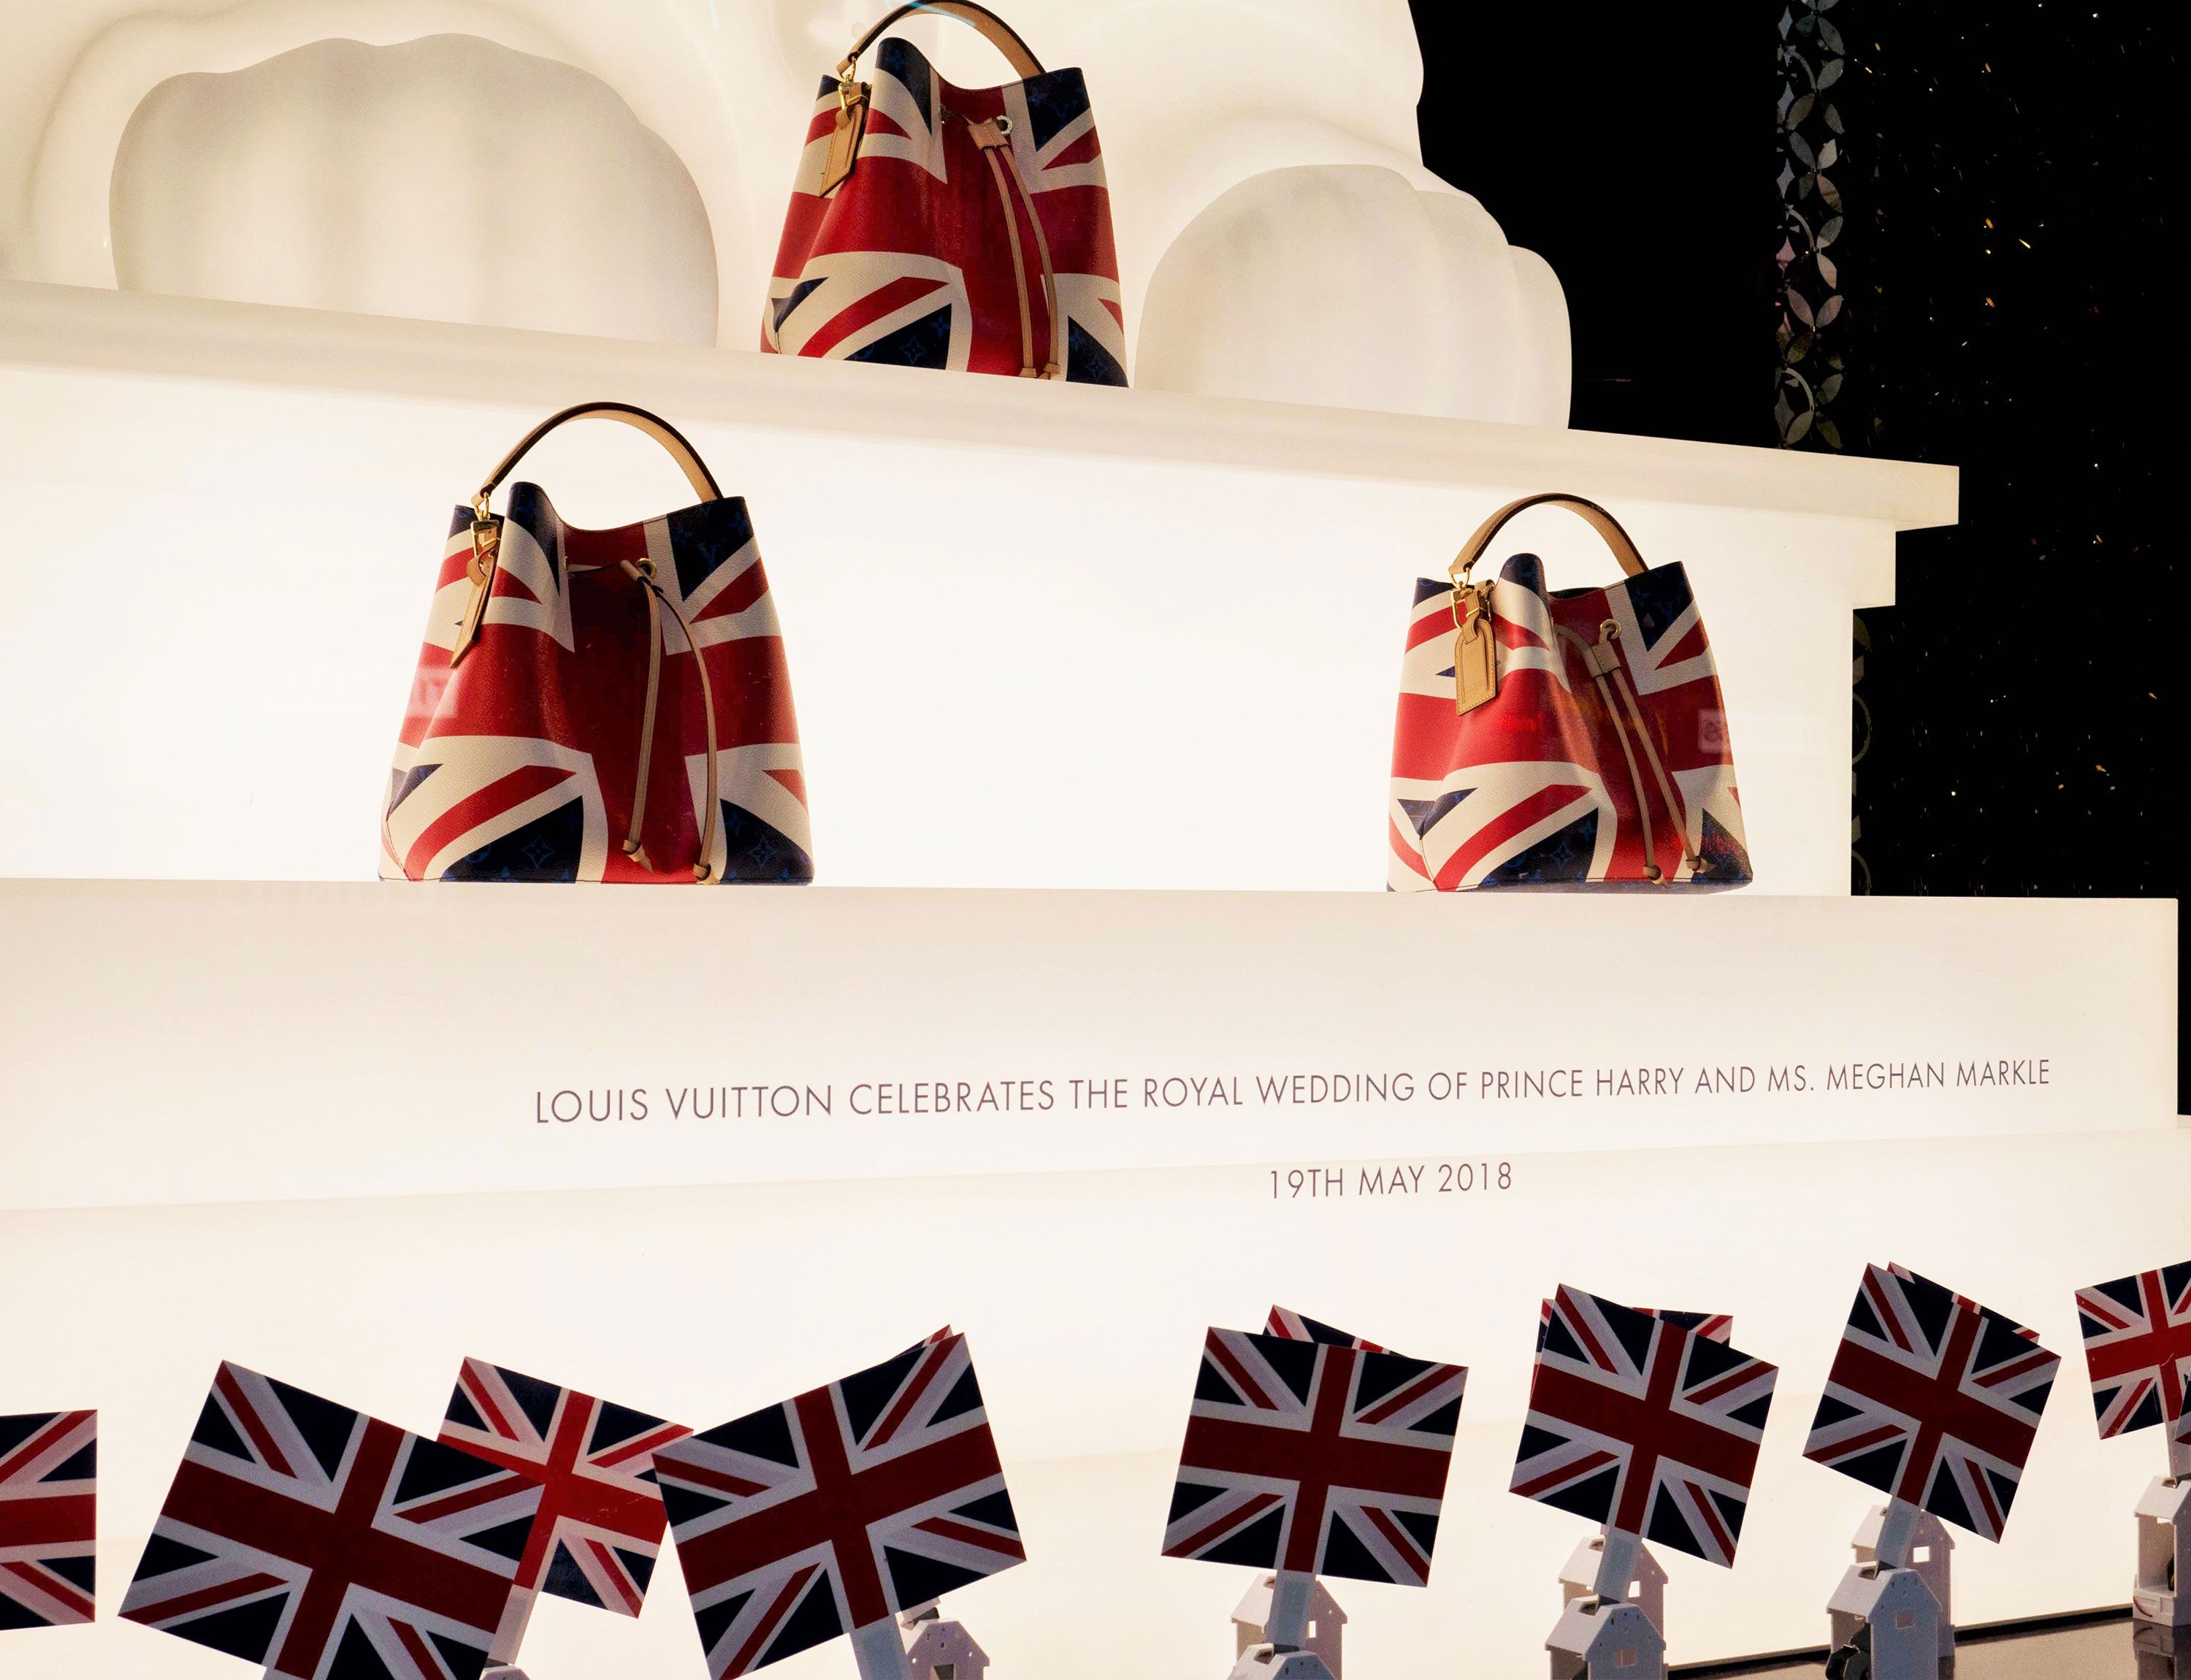 Contact Louis Vuitton London